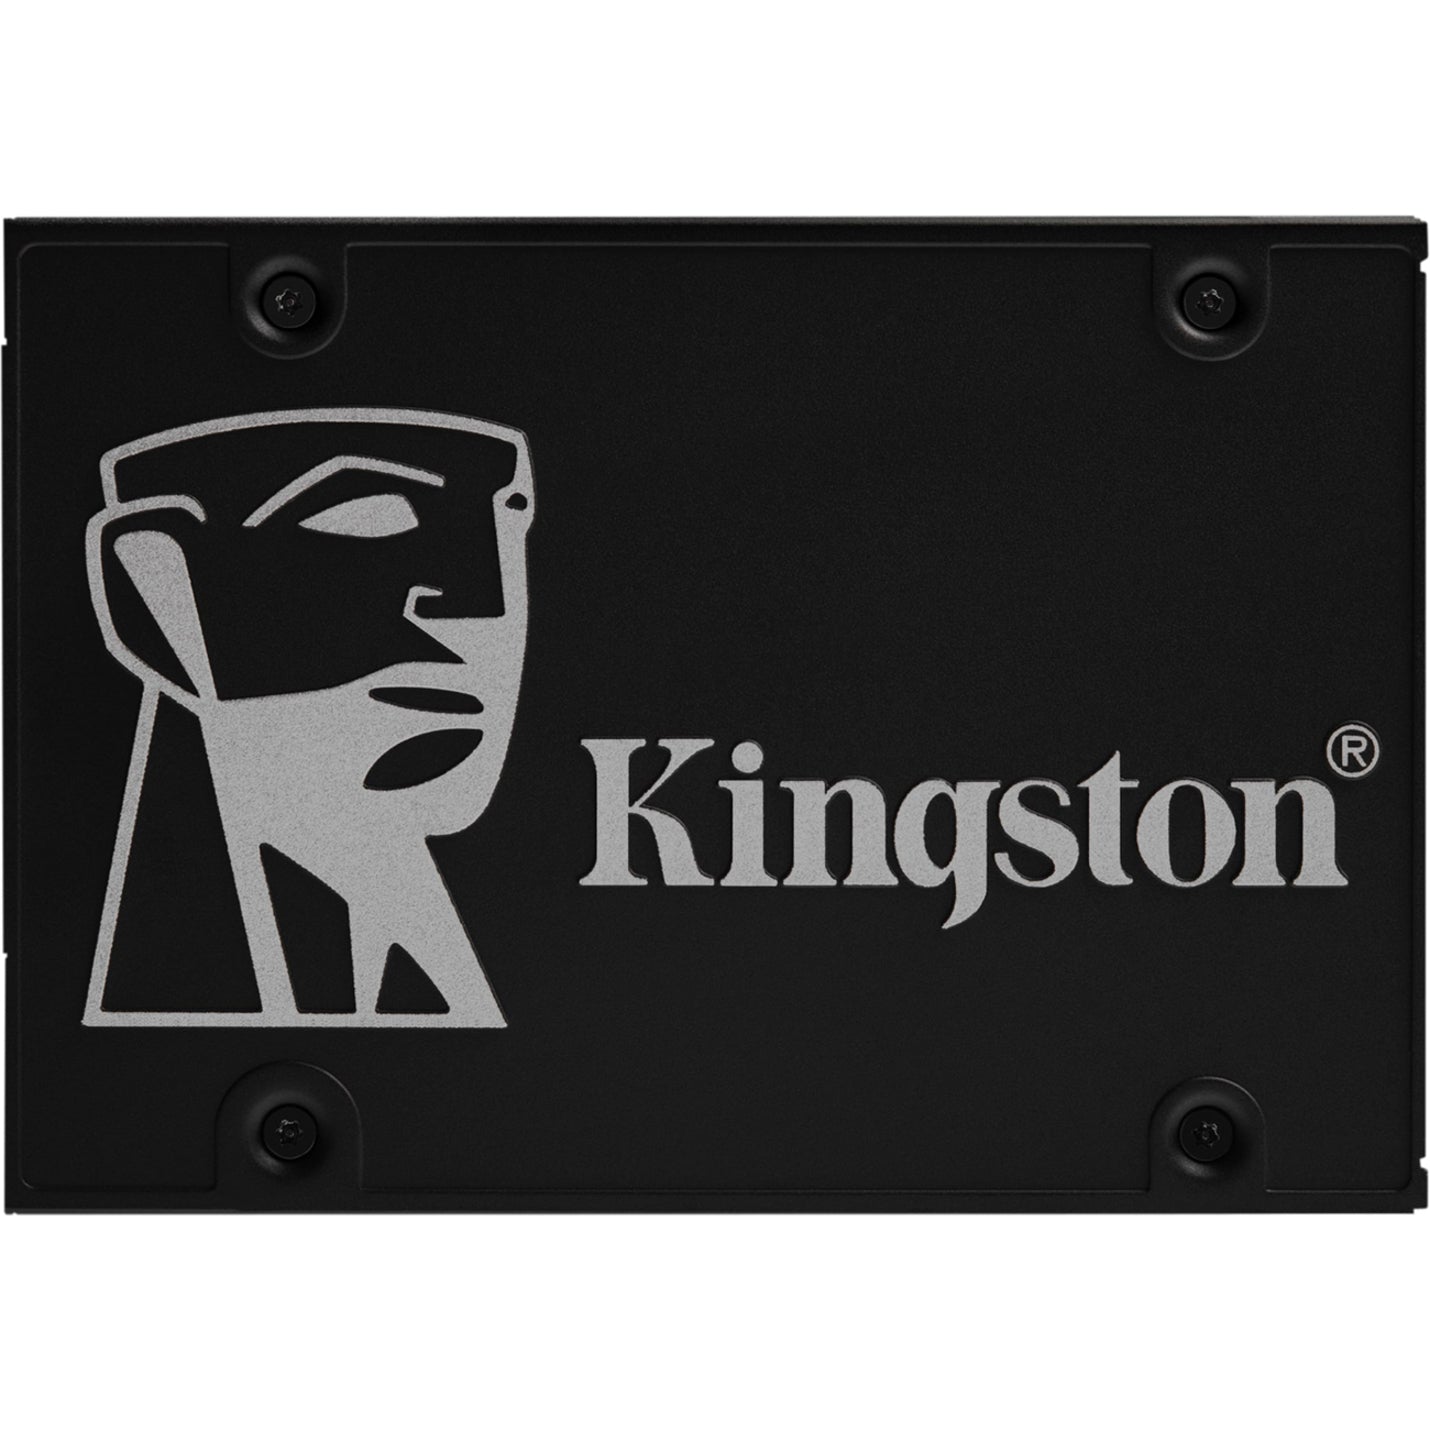 Kingston SKC600/256G KC600 SSD 256GB SATA3 2.5, 6-Year Warranty, 550MB/s Read, 500MB/s Write